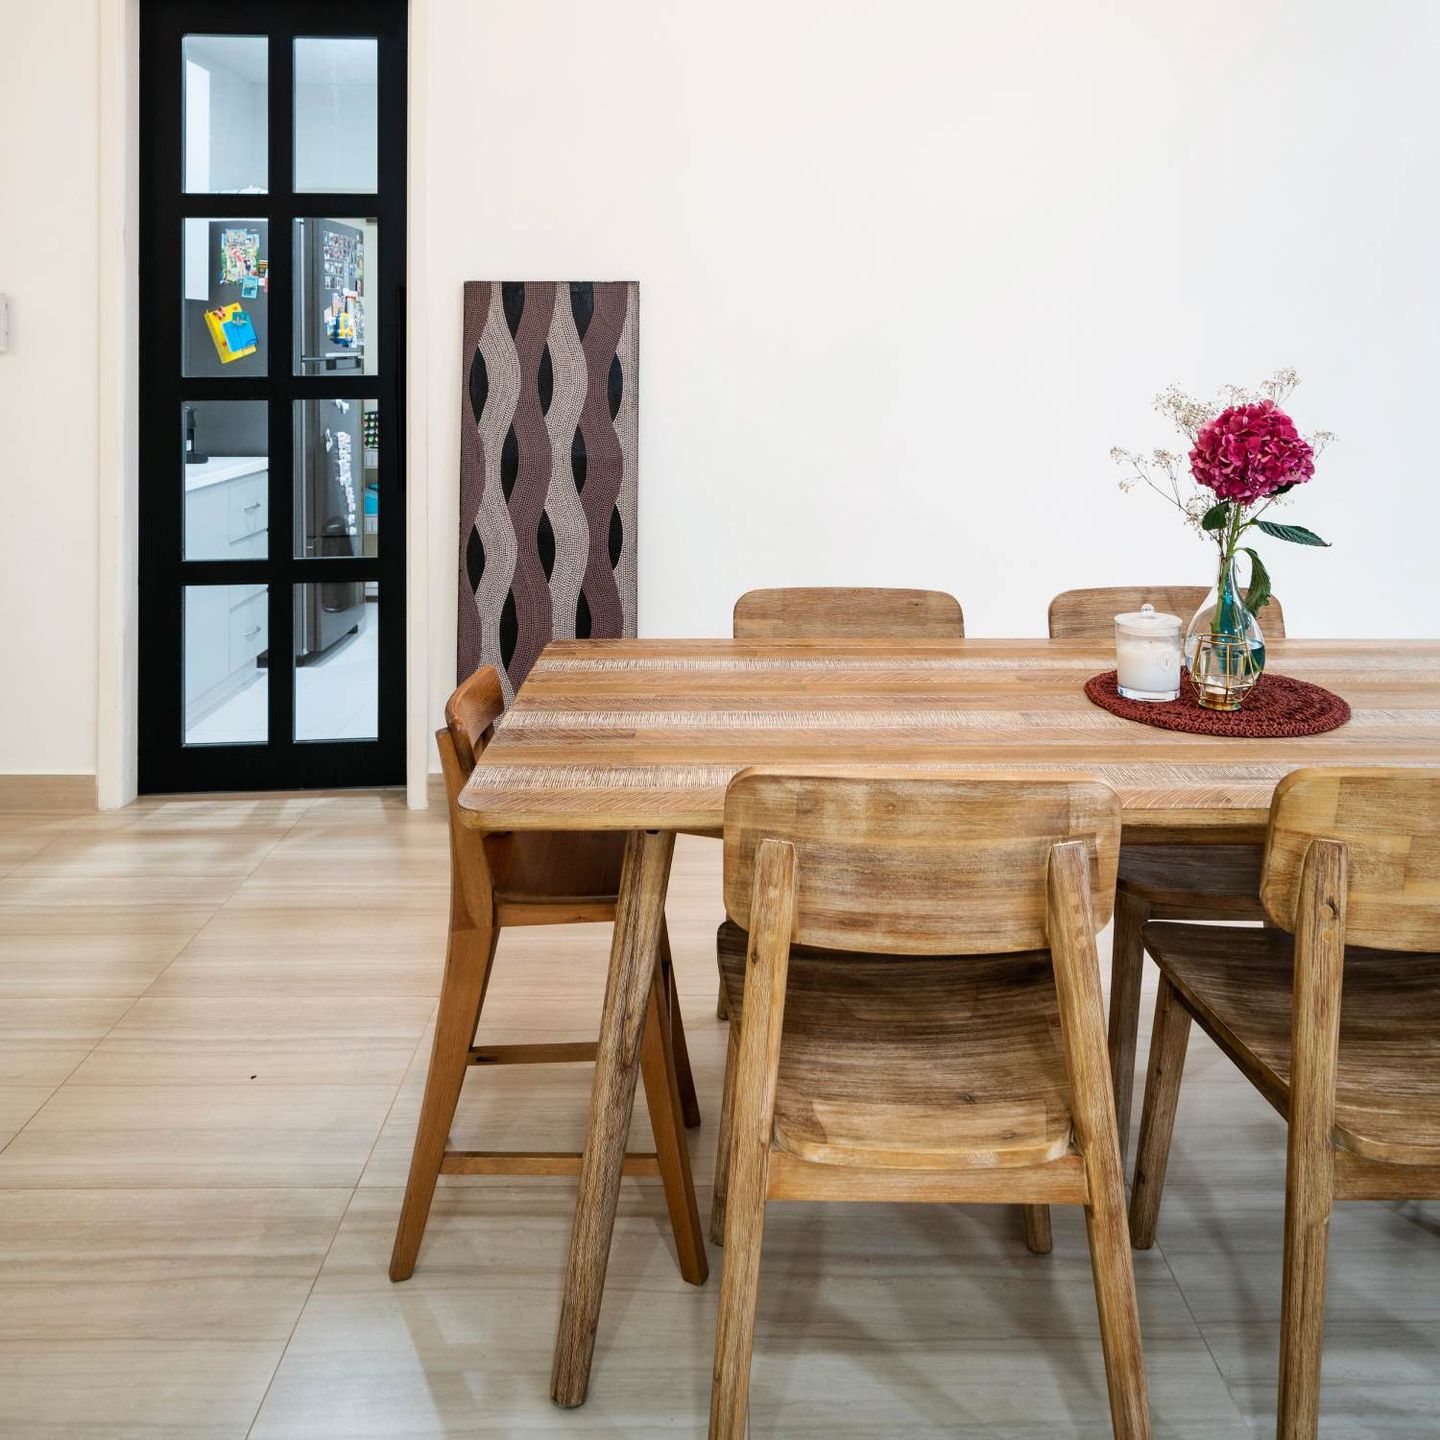 Modern High-Friction Wooden Floor Tiles Design